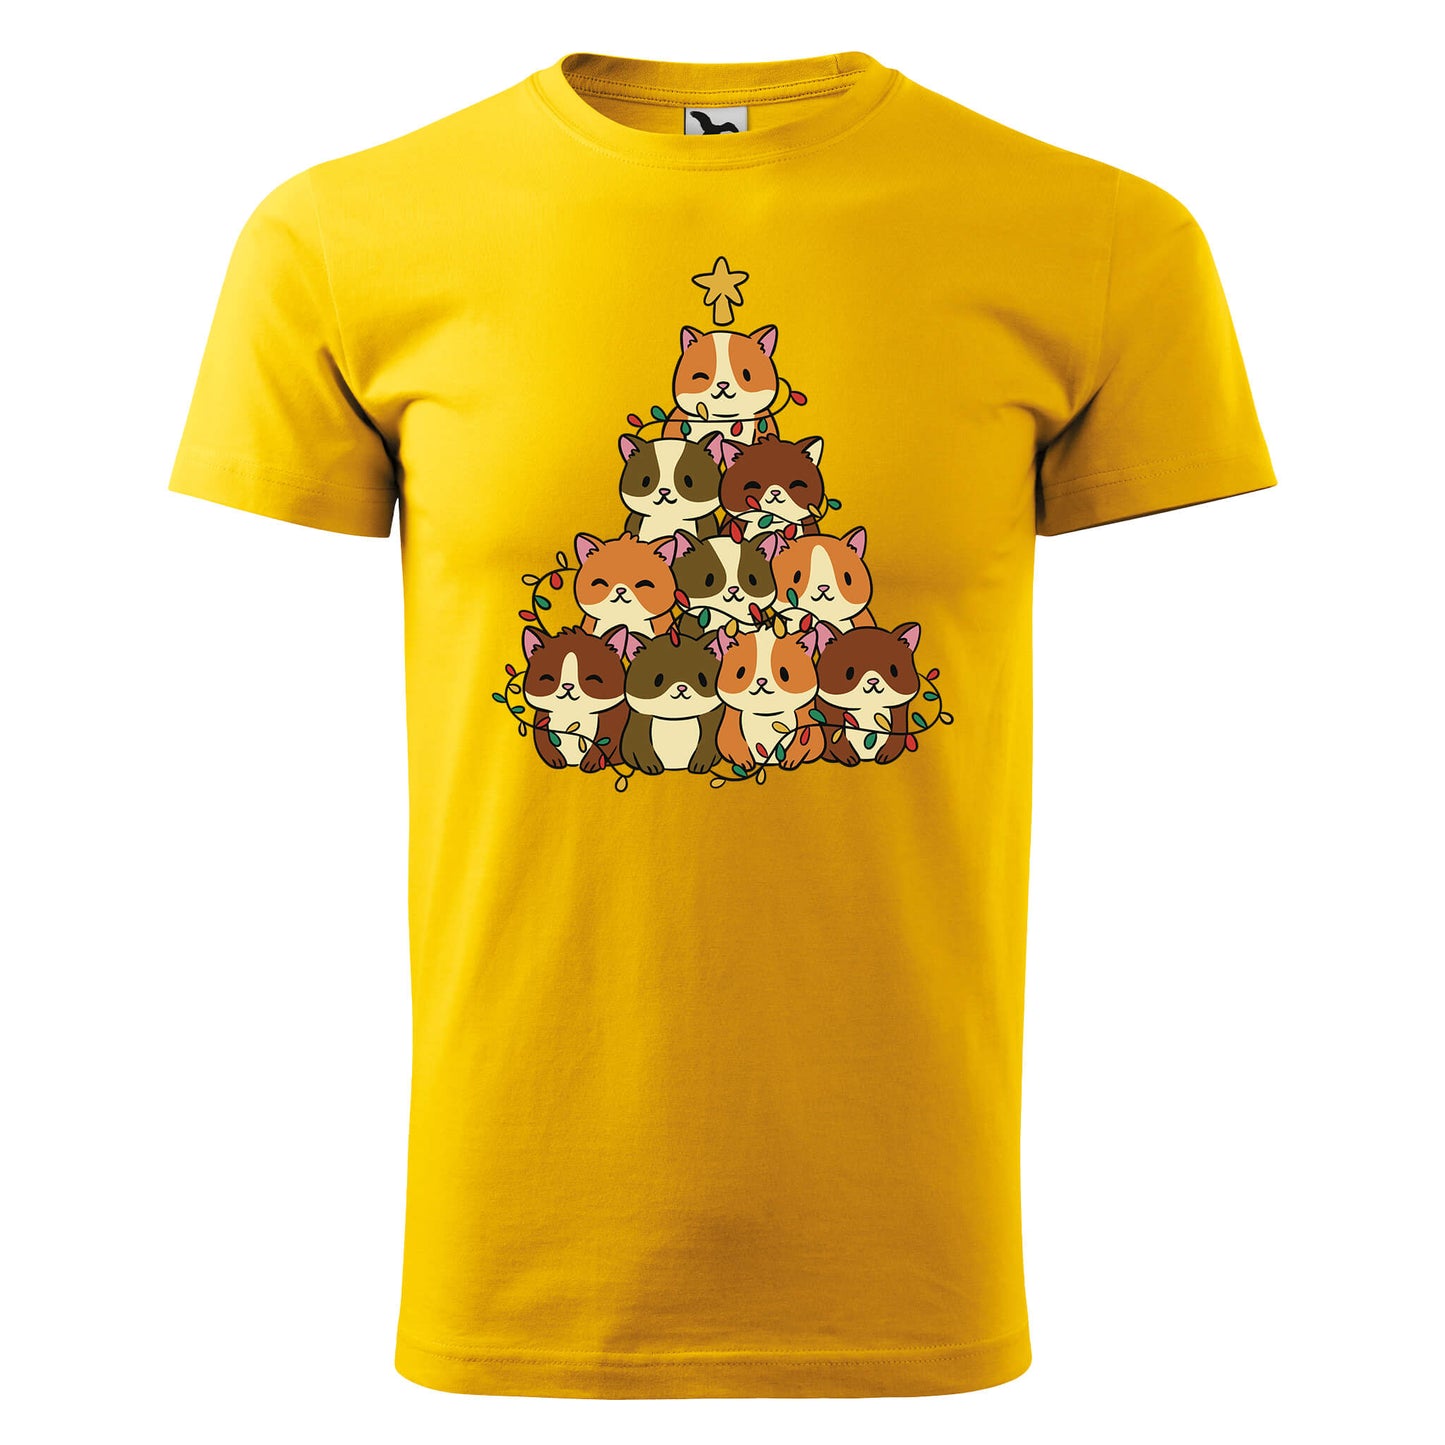 Cat christmas tree t-shirt - rvdesignprint